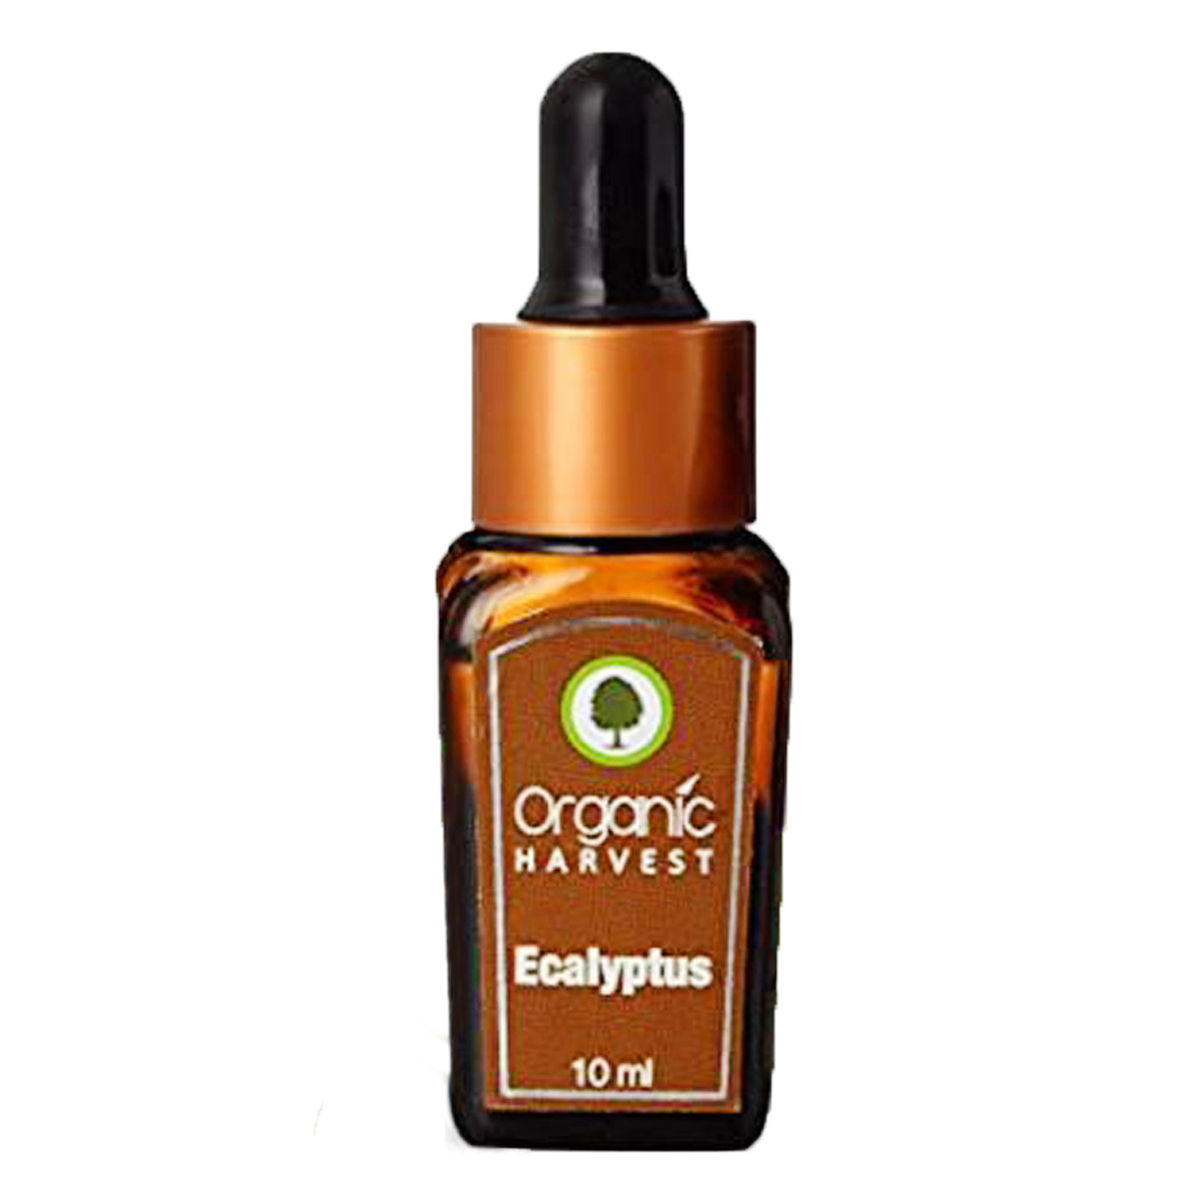 Buy Organic Harvest Ecalyptus Essential Oil, 10 ml Online